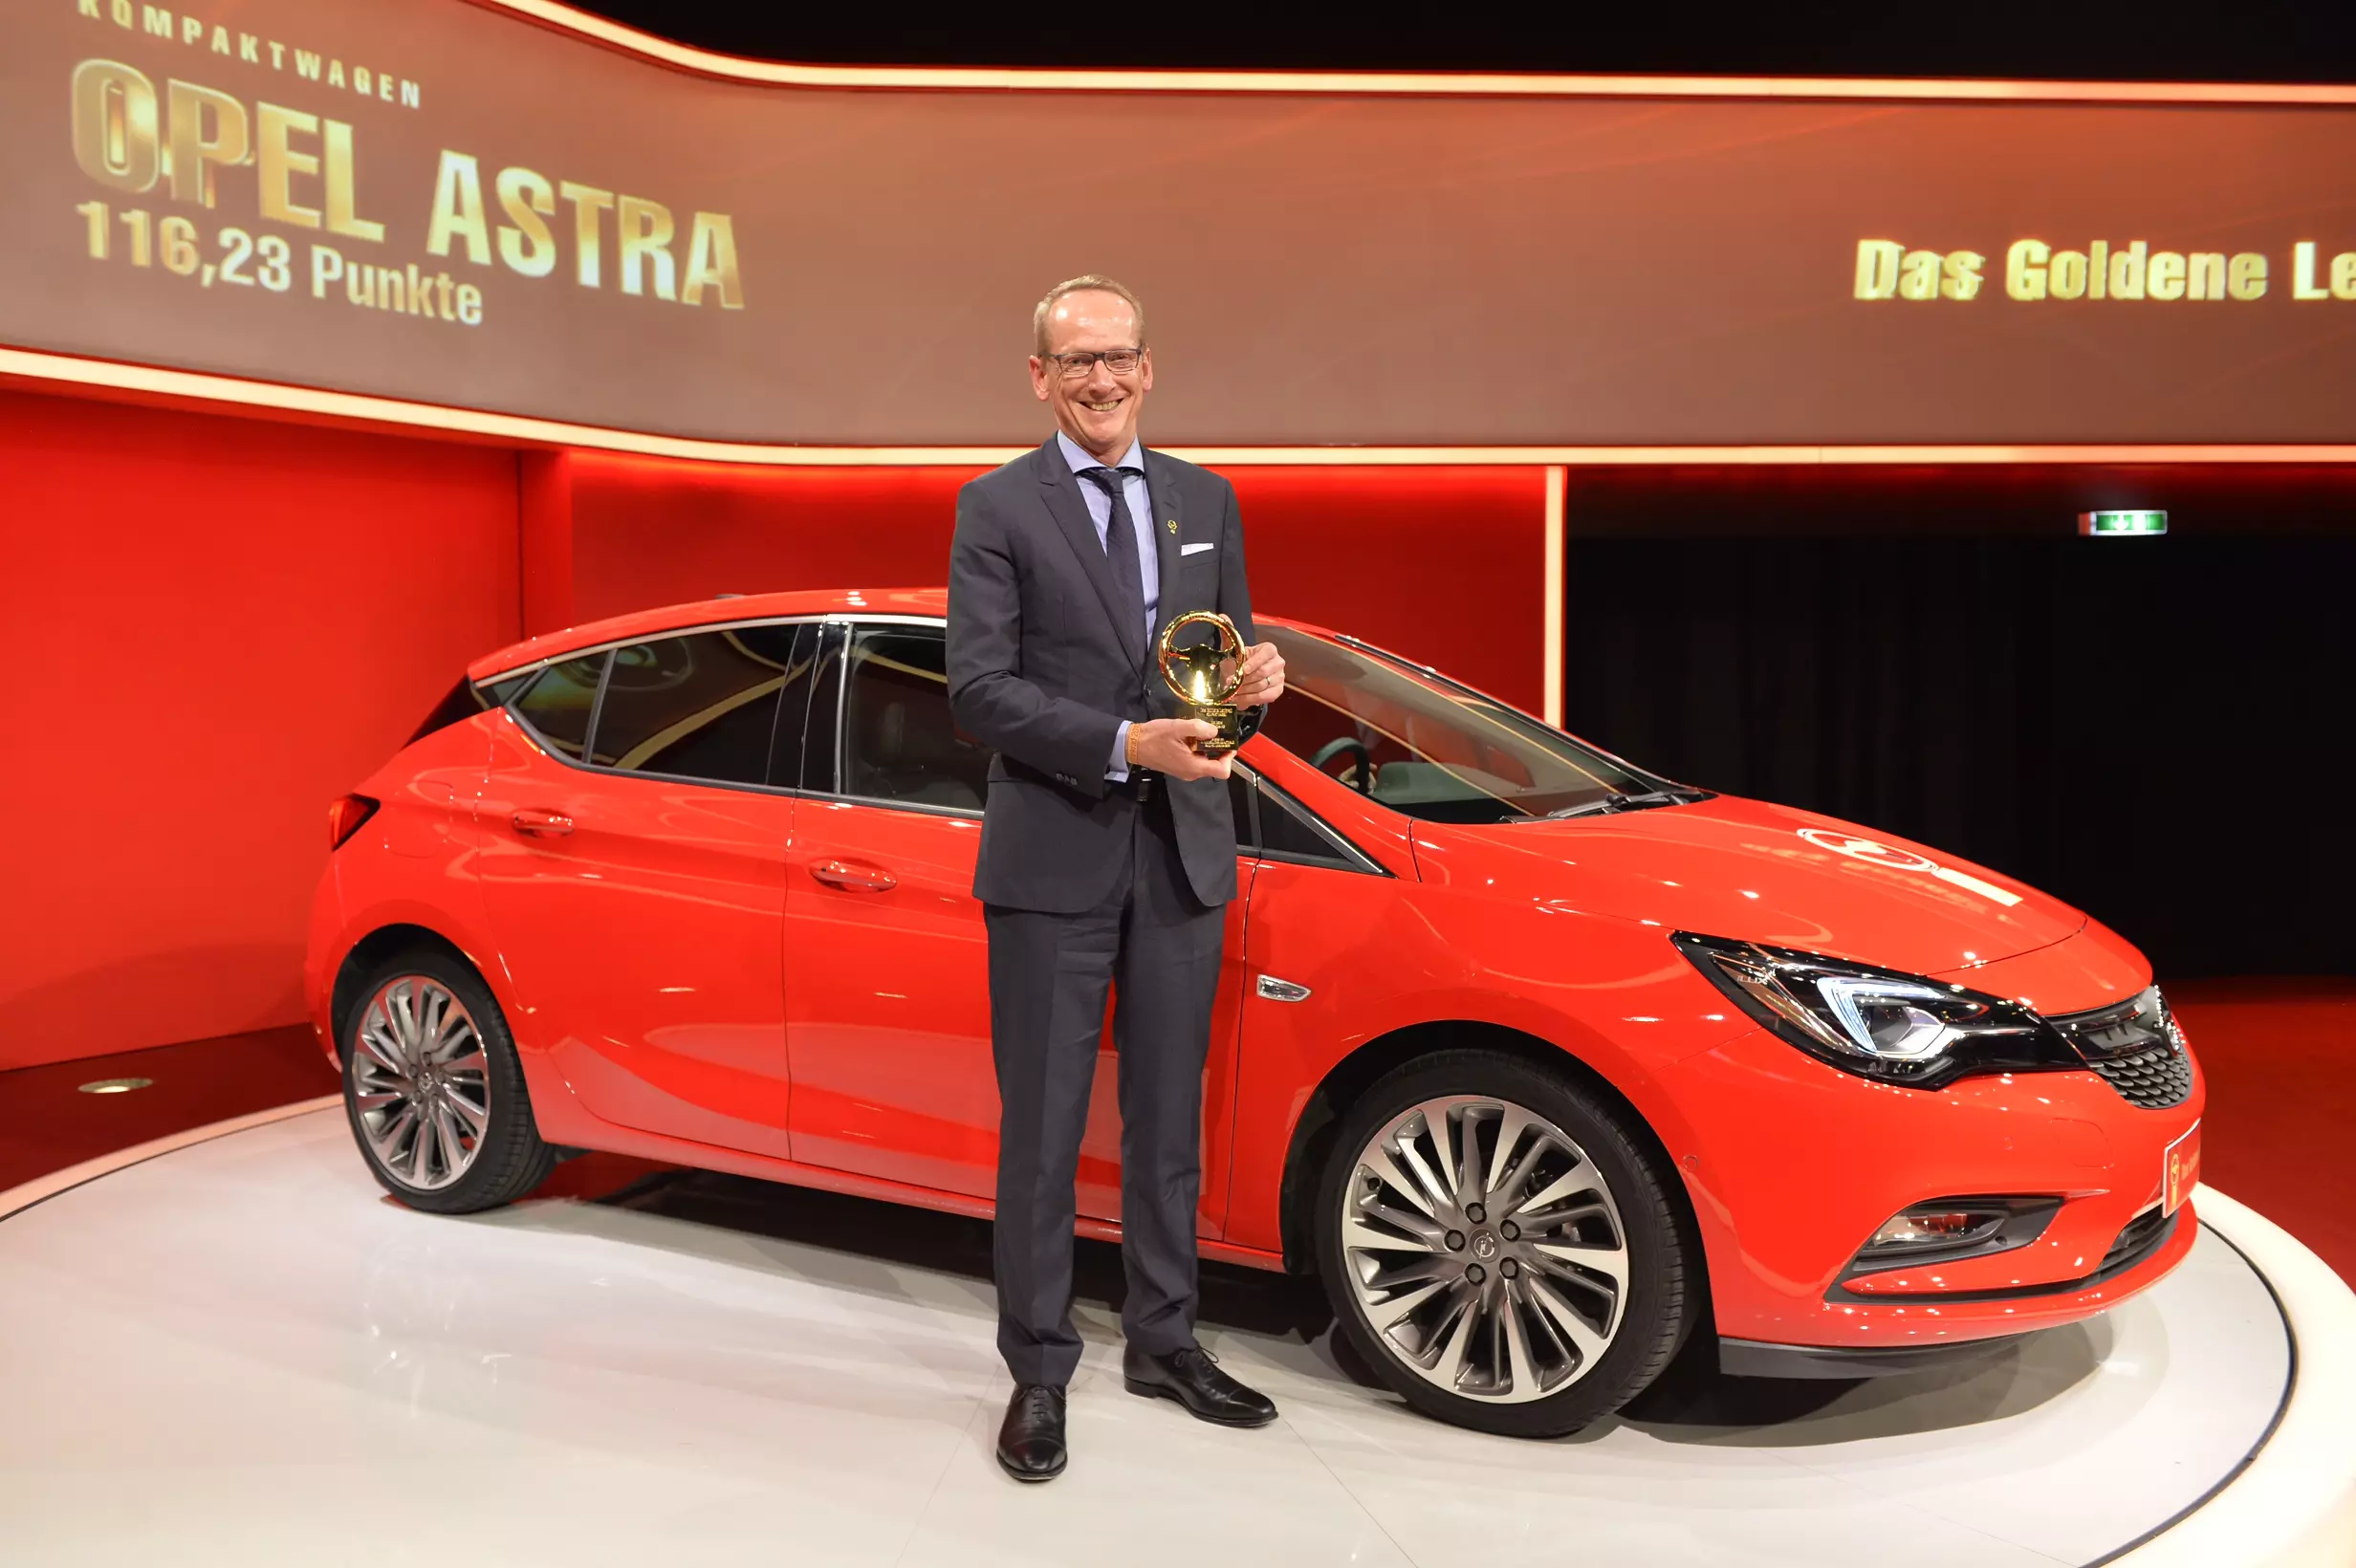 Opel Astra ya nû "Wheel Golden Steering 2015" qezenc kir